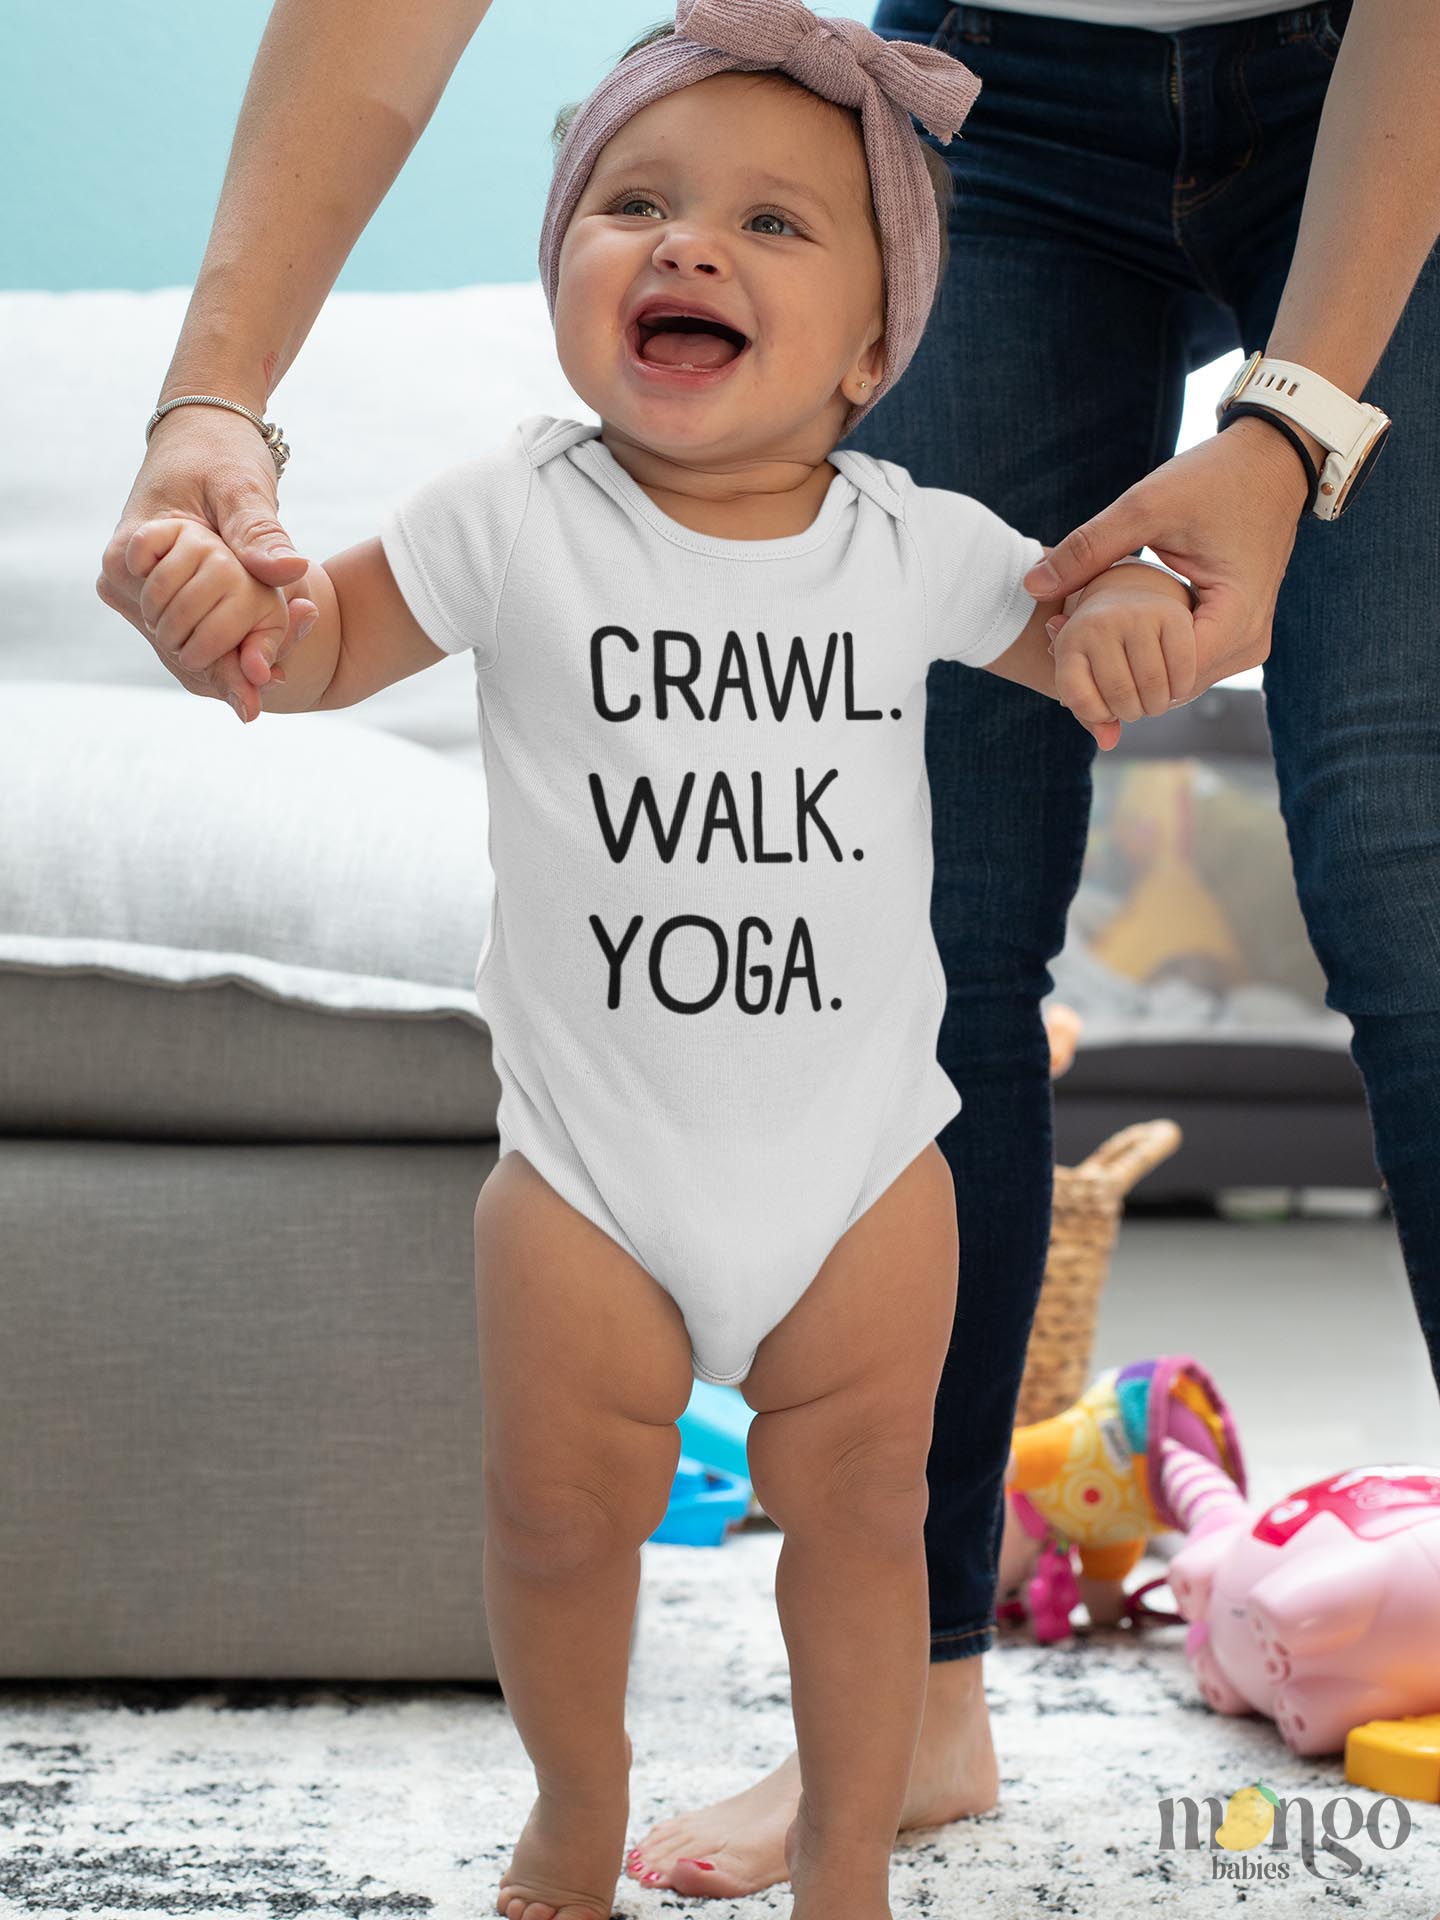 Baby Onesie® Crawl Walk Yoga Baby Infant Clothing for Baby Shower Gift